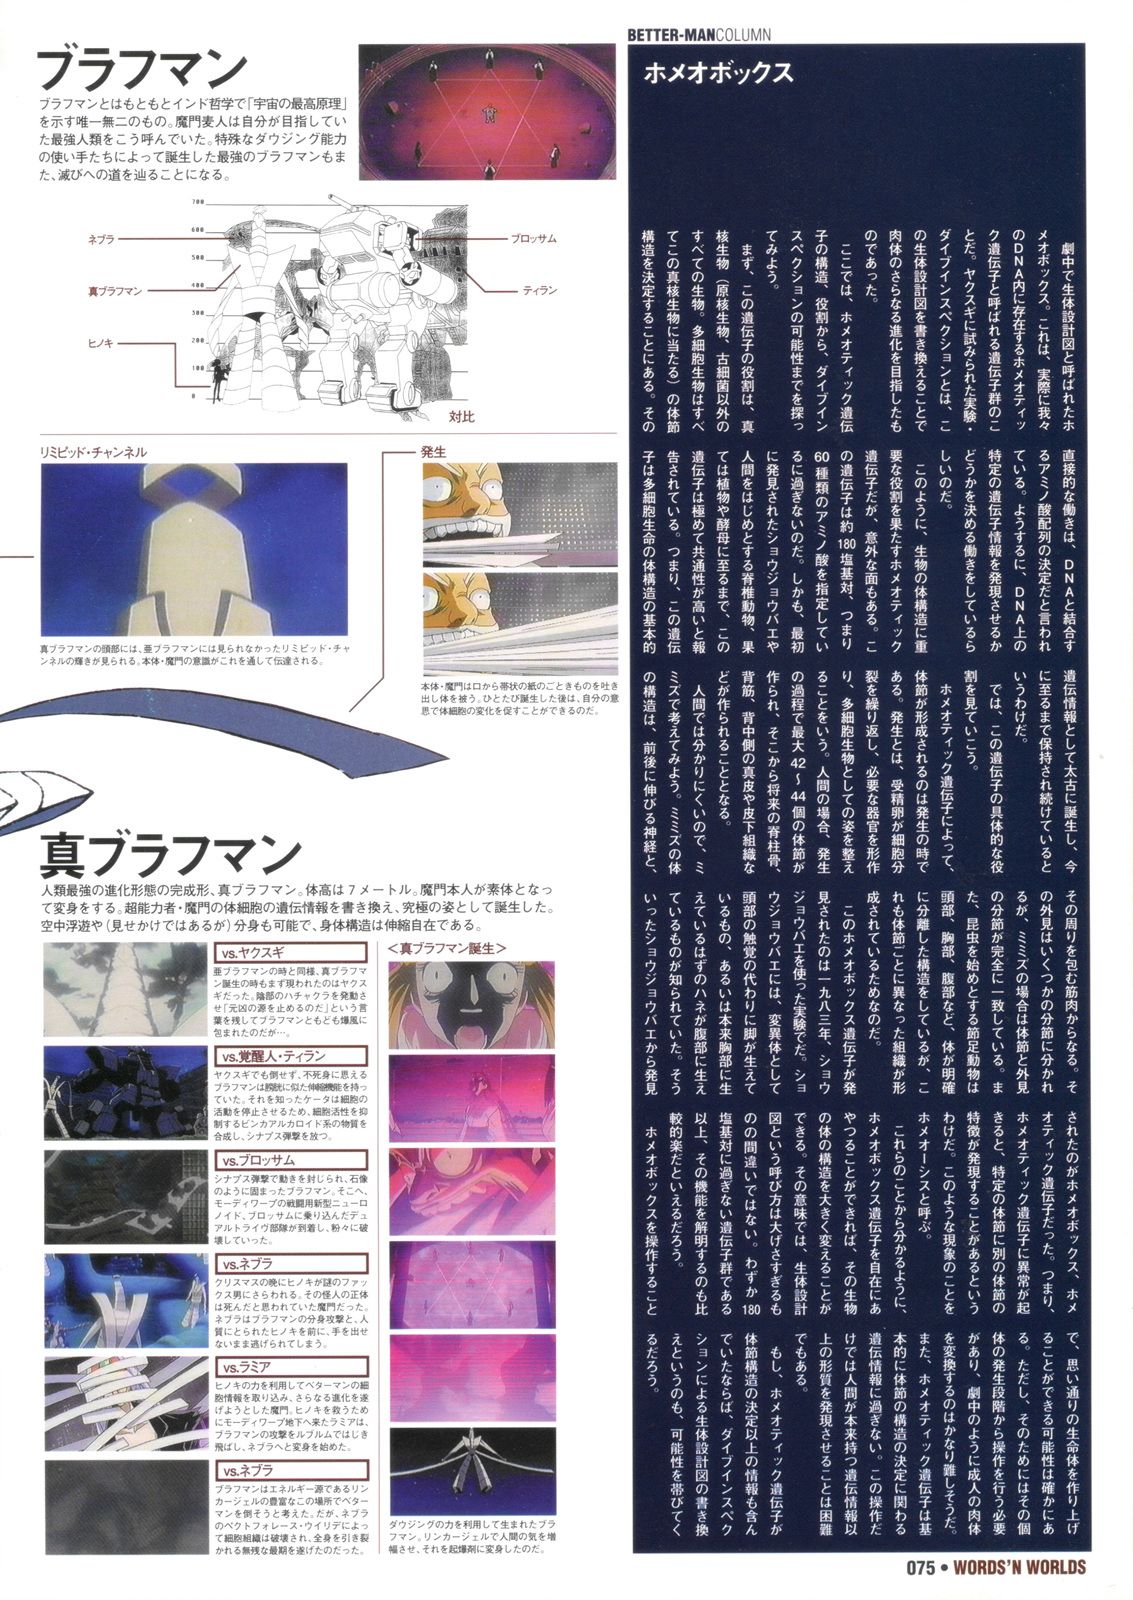 BETTERMAN COMPLETE BOOK 鑑-kagami- - 第02卷(2/3) - 5